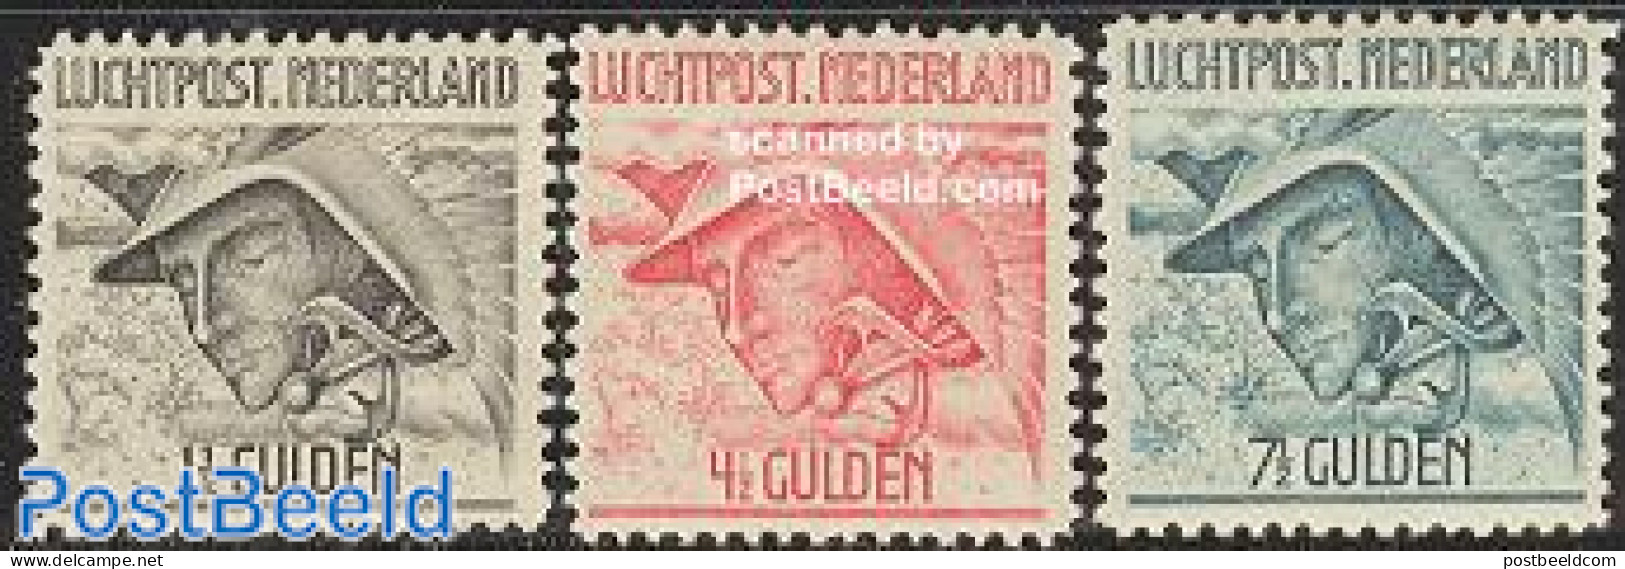 Netherlands 1929 Airmail, Mercurius 3v, Mint NH, Religion - Greek & Roman Gods - Airmail